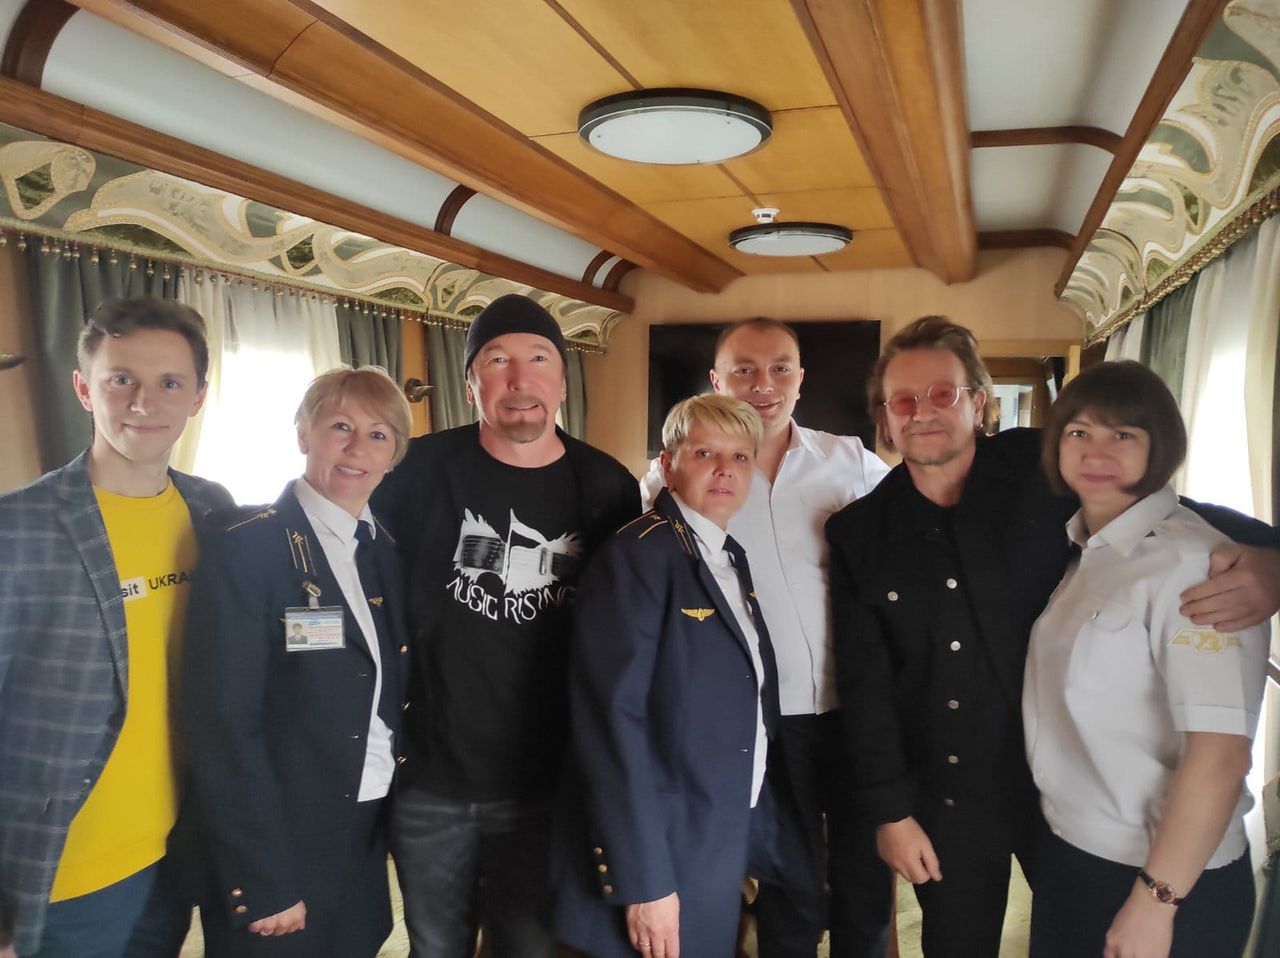 The crew of the Ukrainian Railways with the lead singer of U2 - Bono